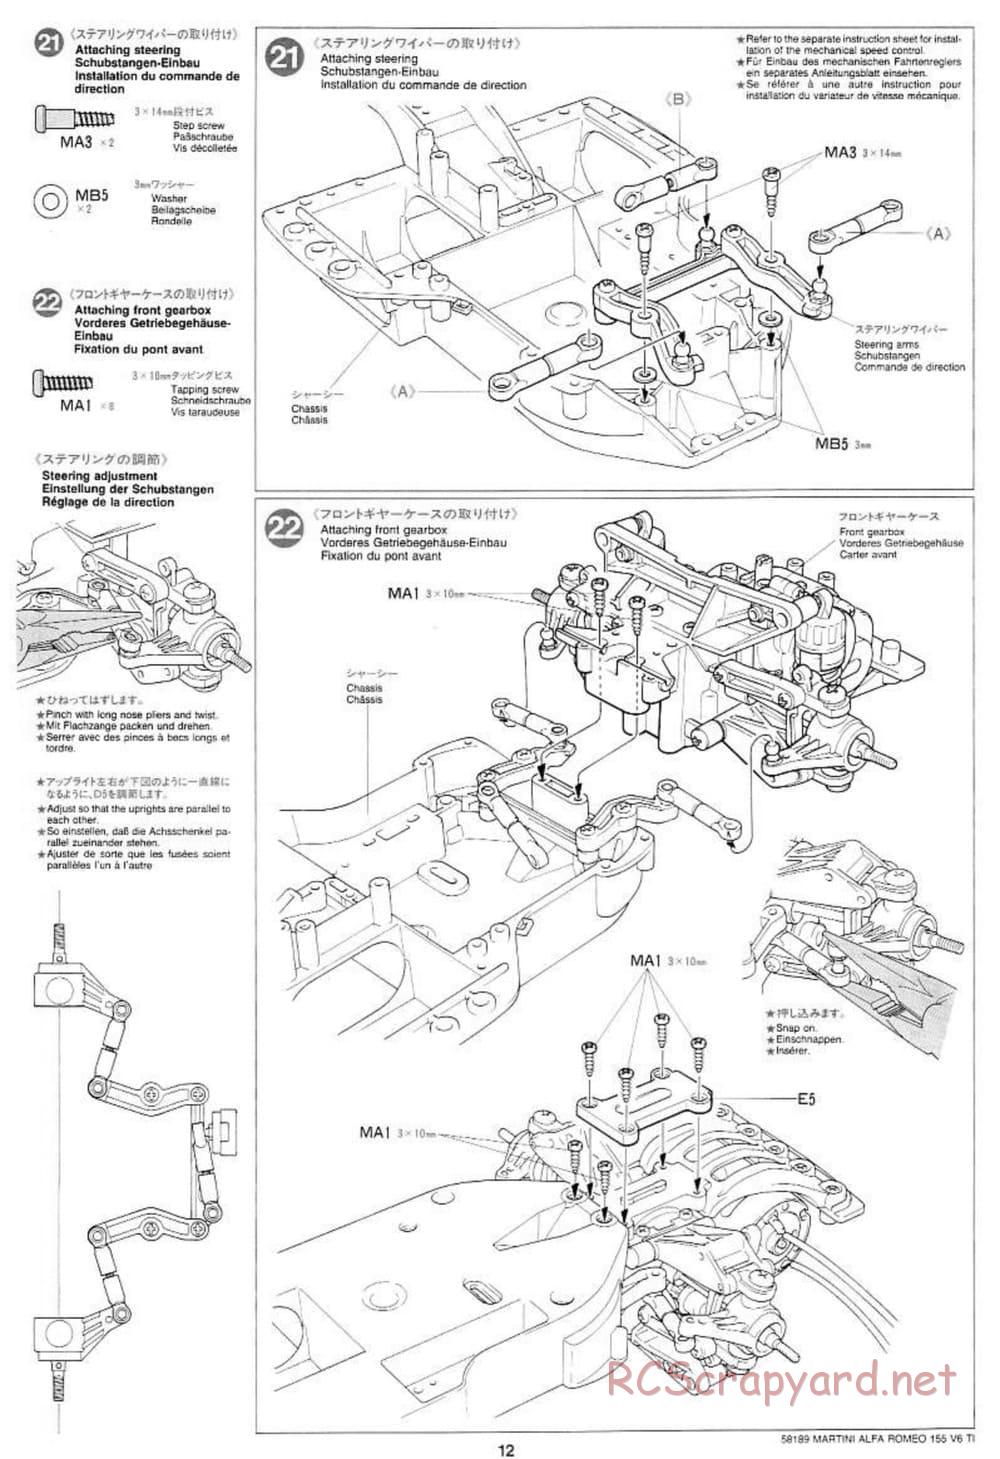 Tamiya - Martini Alfa Romeo 155 V6 TI - TA-03F Chassis - Manual - Page 12